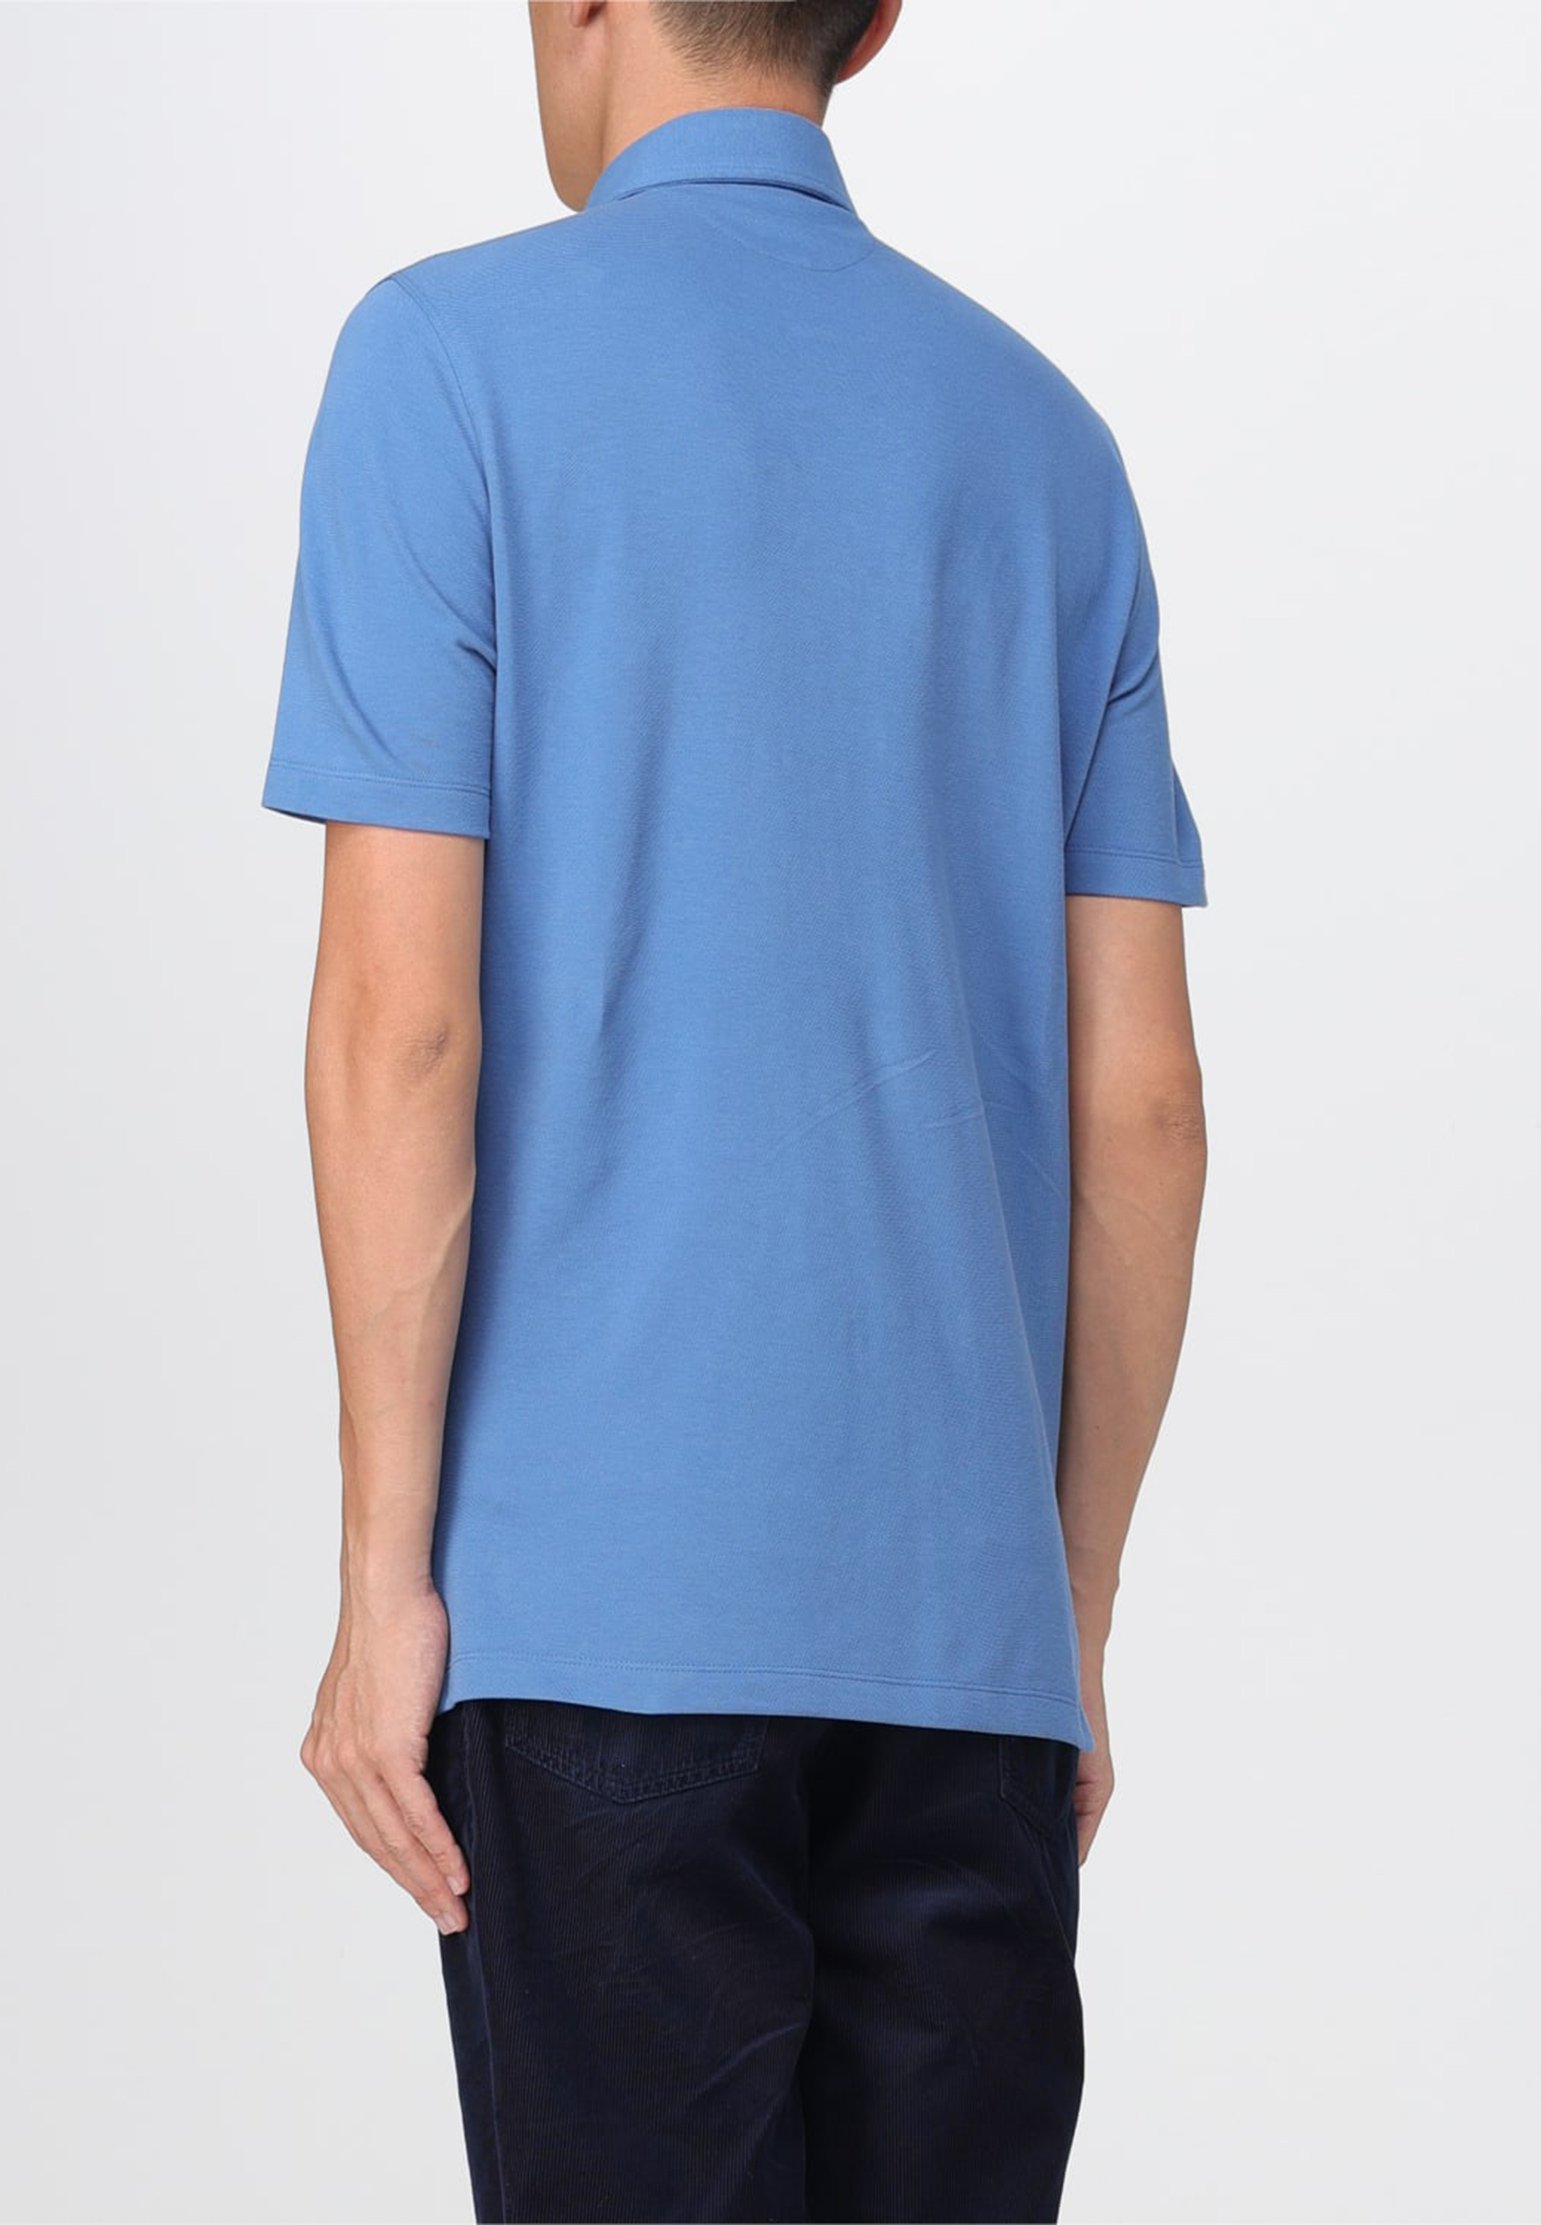 Polo BRUNELLO CUCINELLI Color: navy blue (Code: 1185) in online store Allure